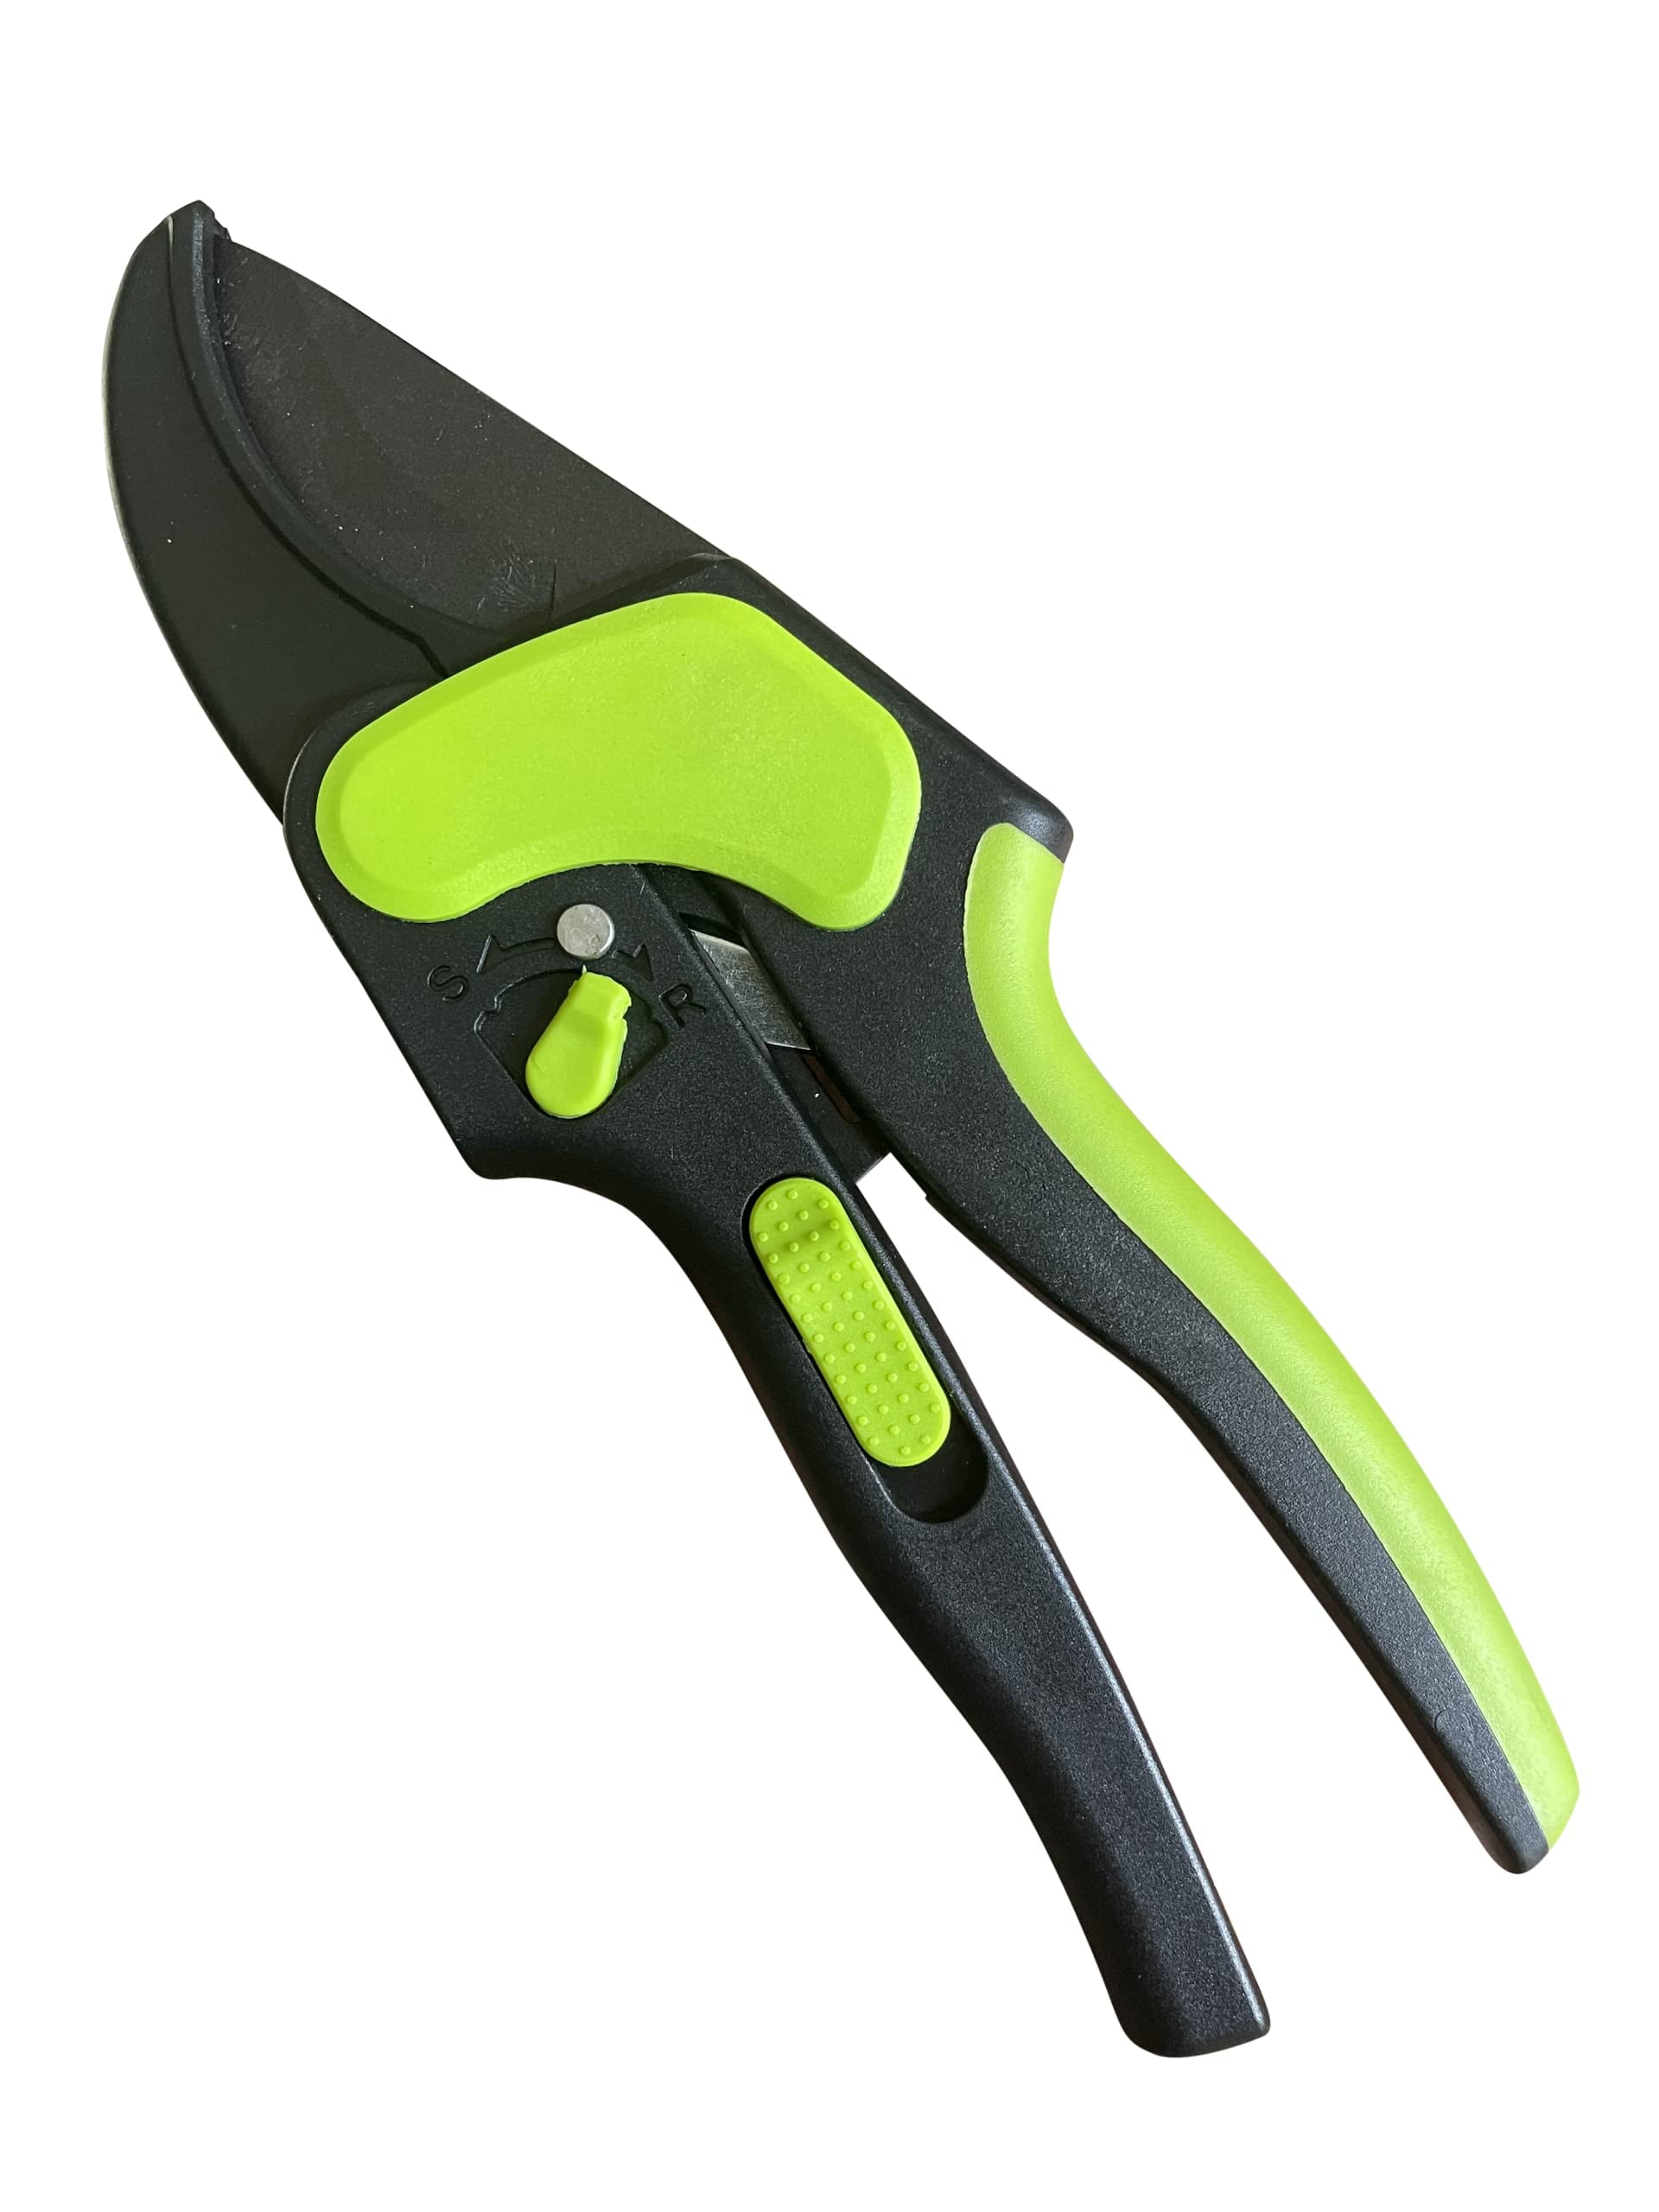 Premium Razorsharp Geared Anvil Secateurs gardening pruners for easier cutting 